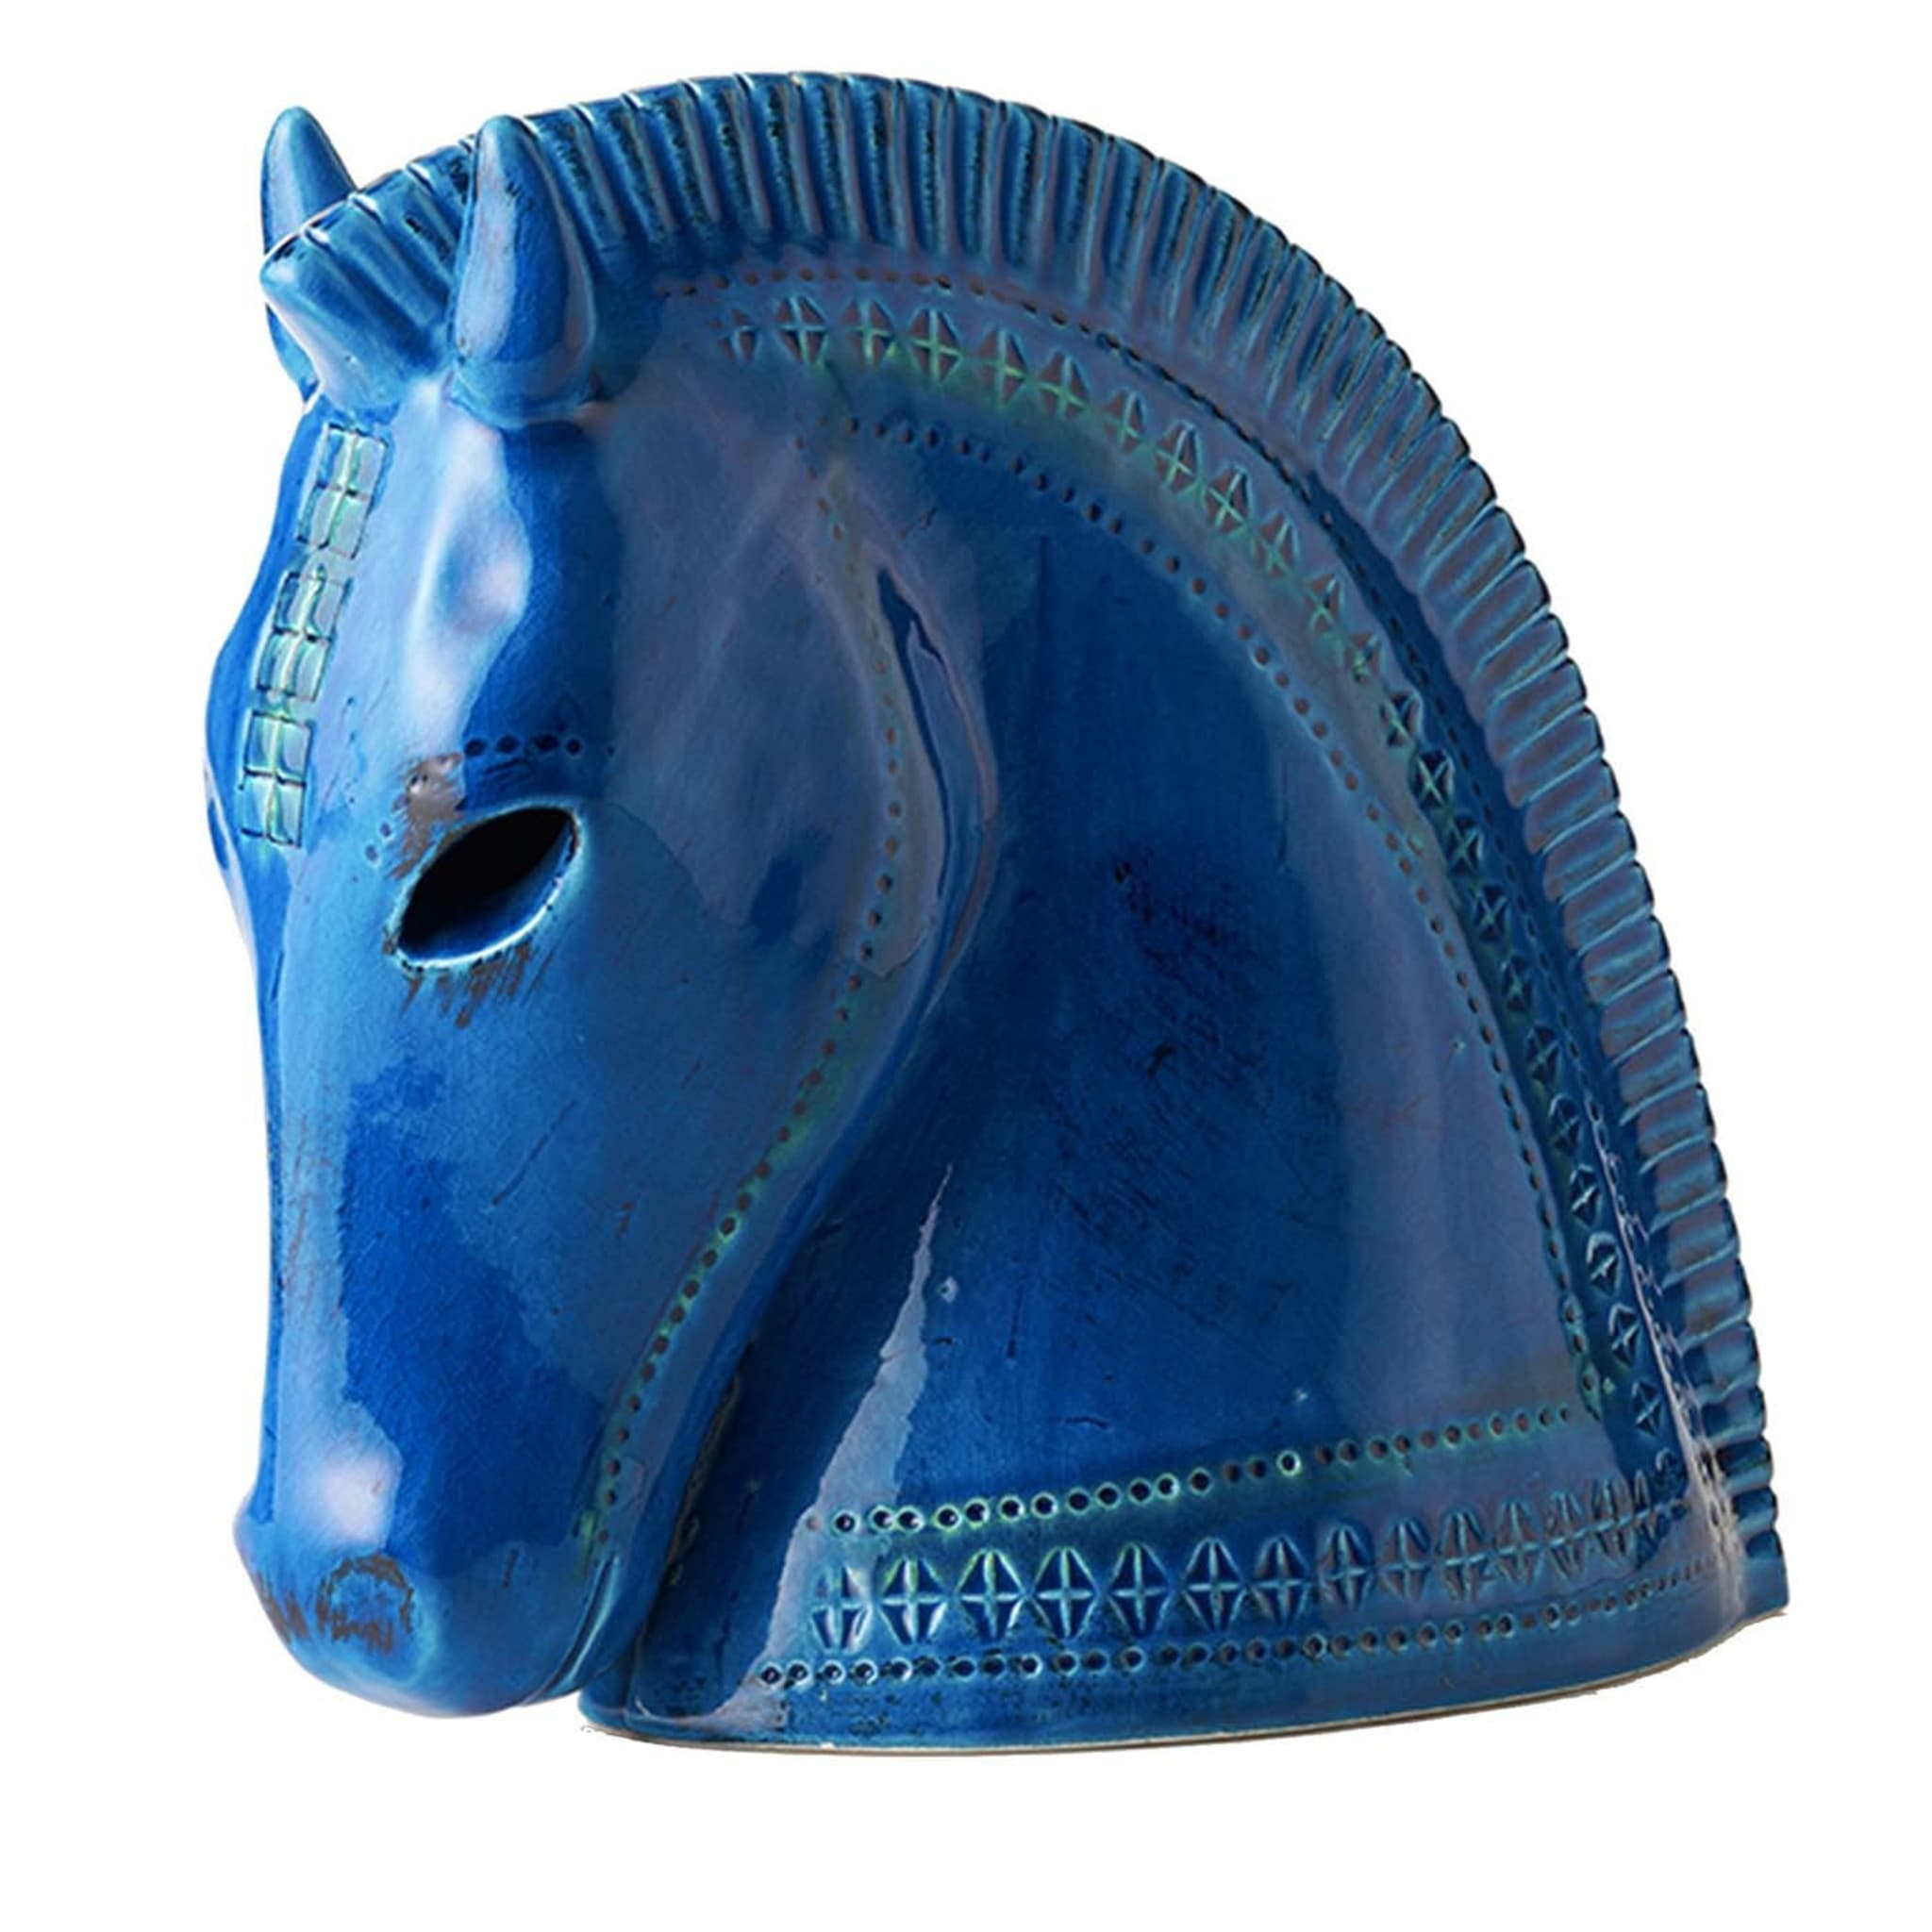 Figurina testa di cavallo Rimini Blu di Aldo Londi - Vista principale